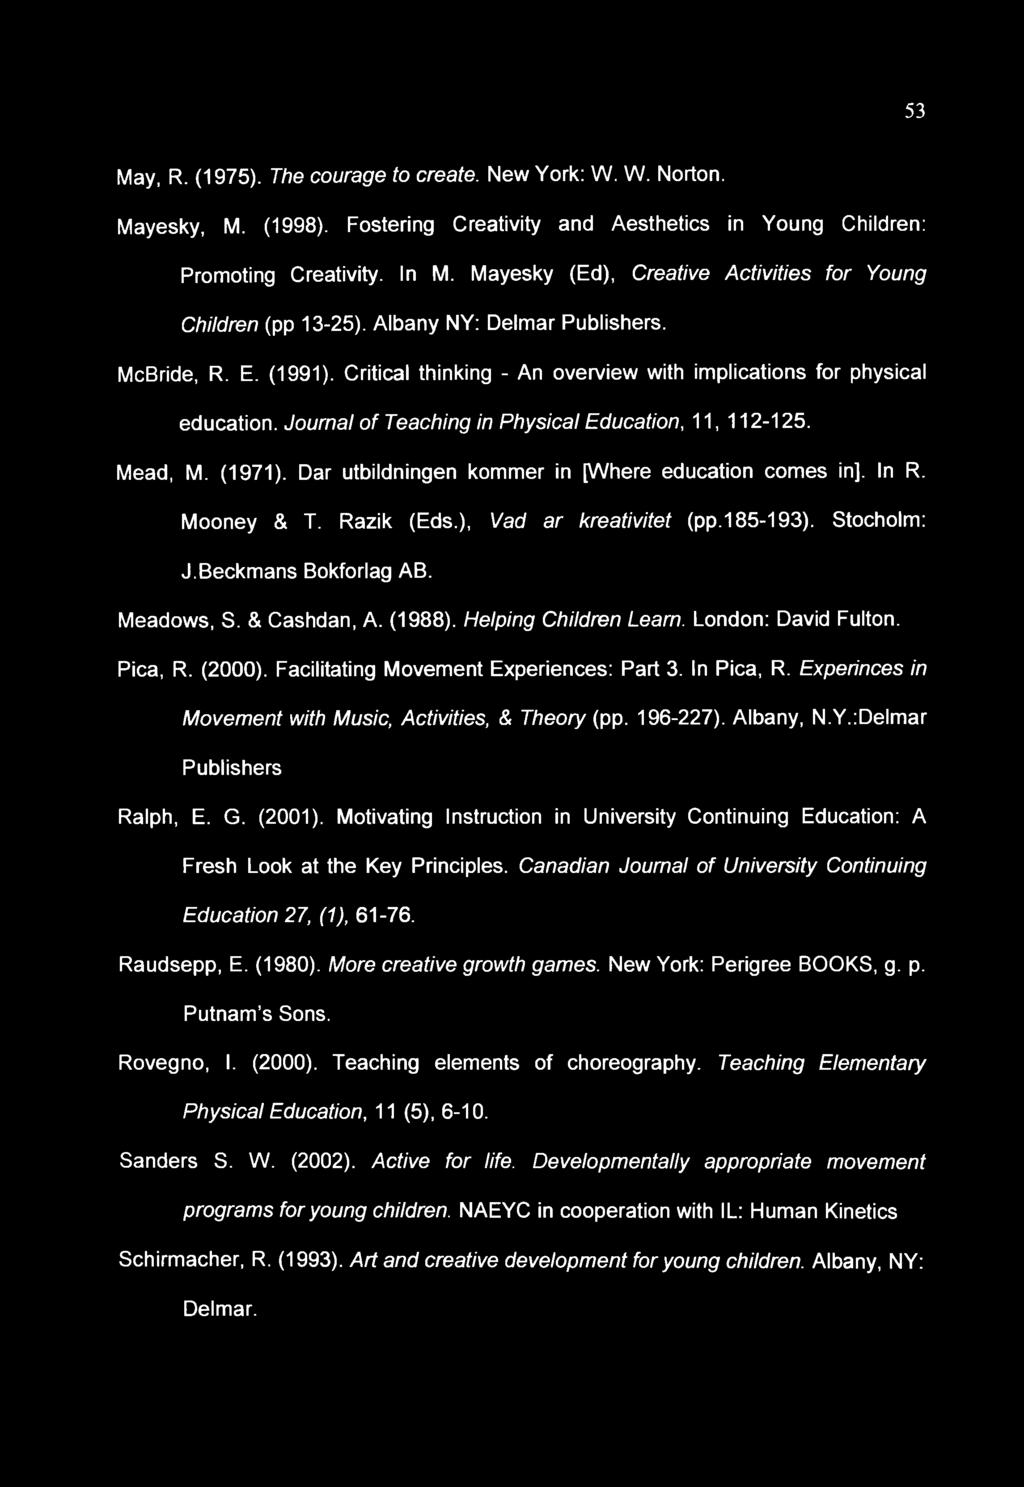 Journal of Teaching in Physical Education, 11, 112-125. Mead, M. (1971). Dar utbildningen kommer in [Where education comes in]. In R. Mooney & T. Razik (Eds.), Vad ar kreativitet (pp.185-193).